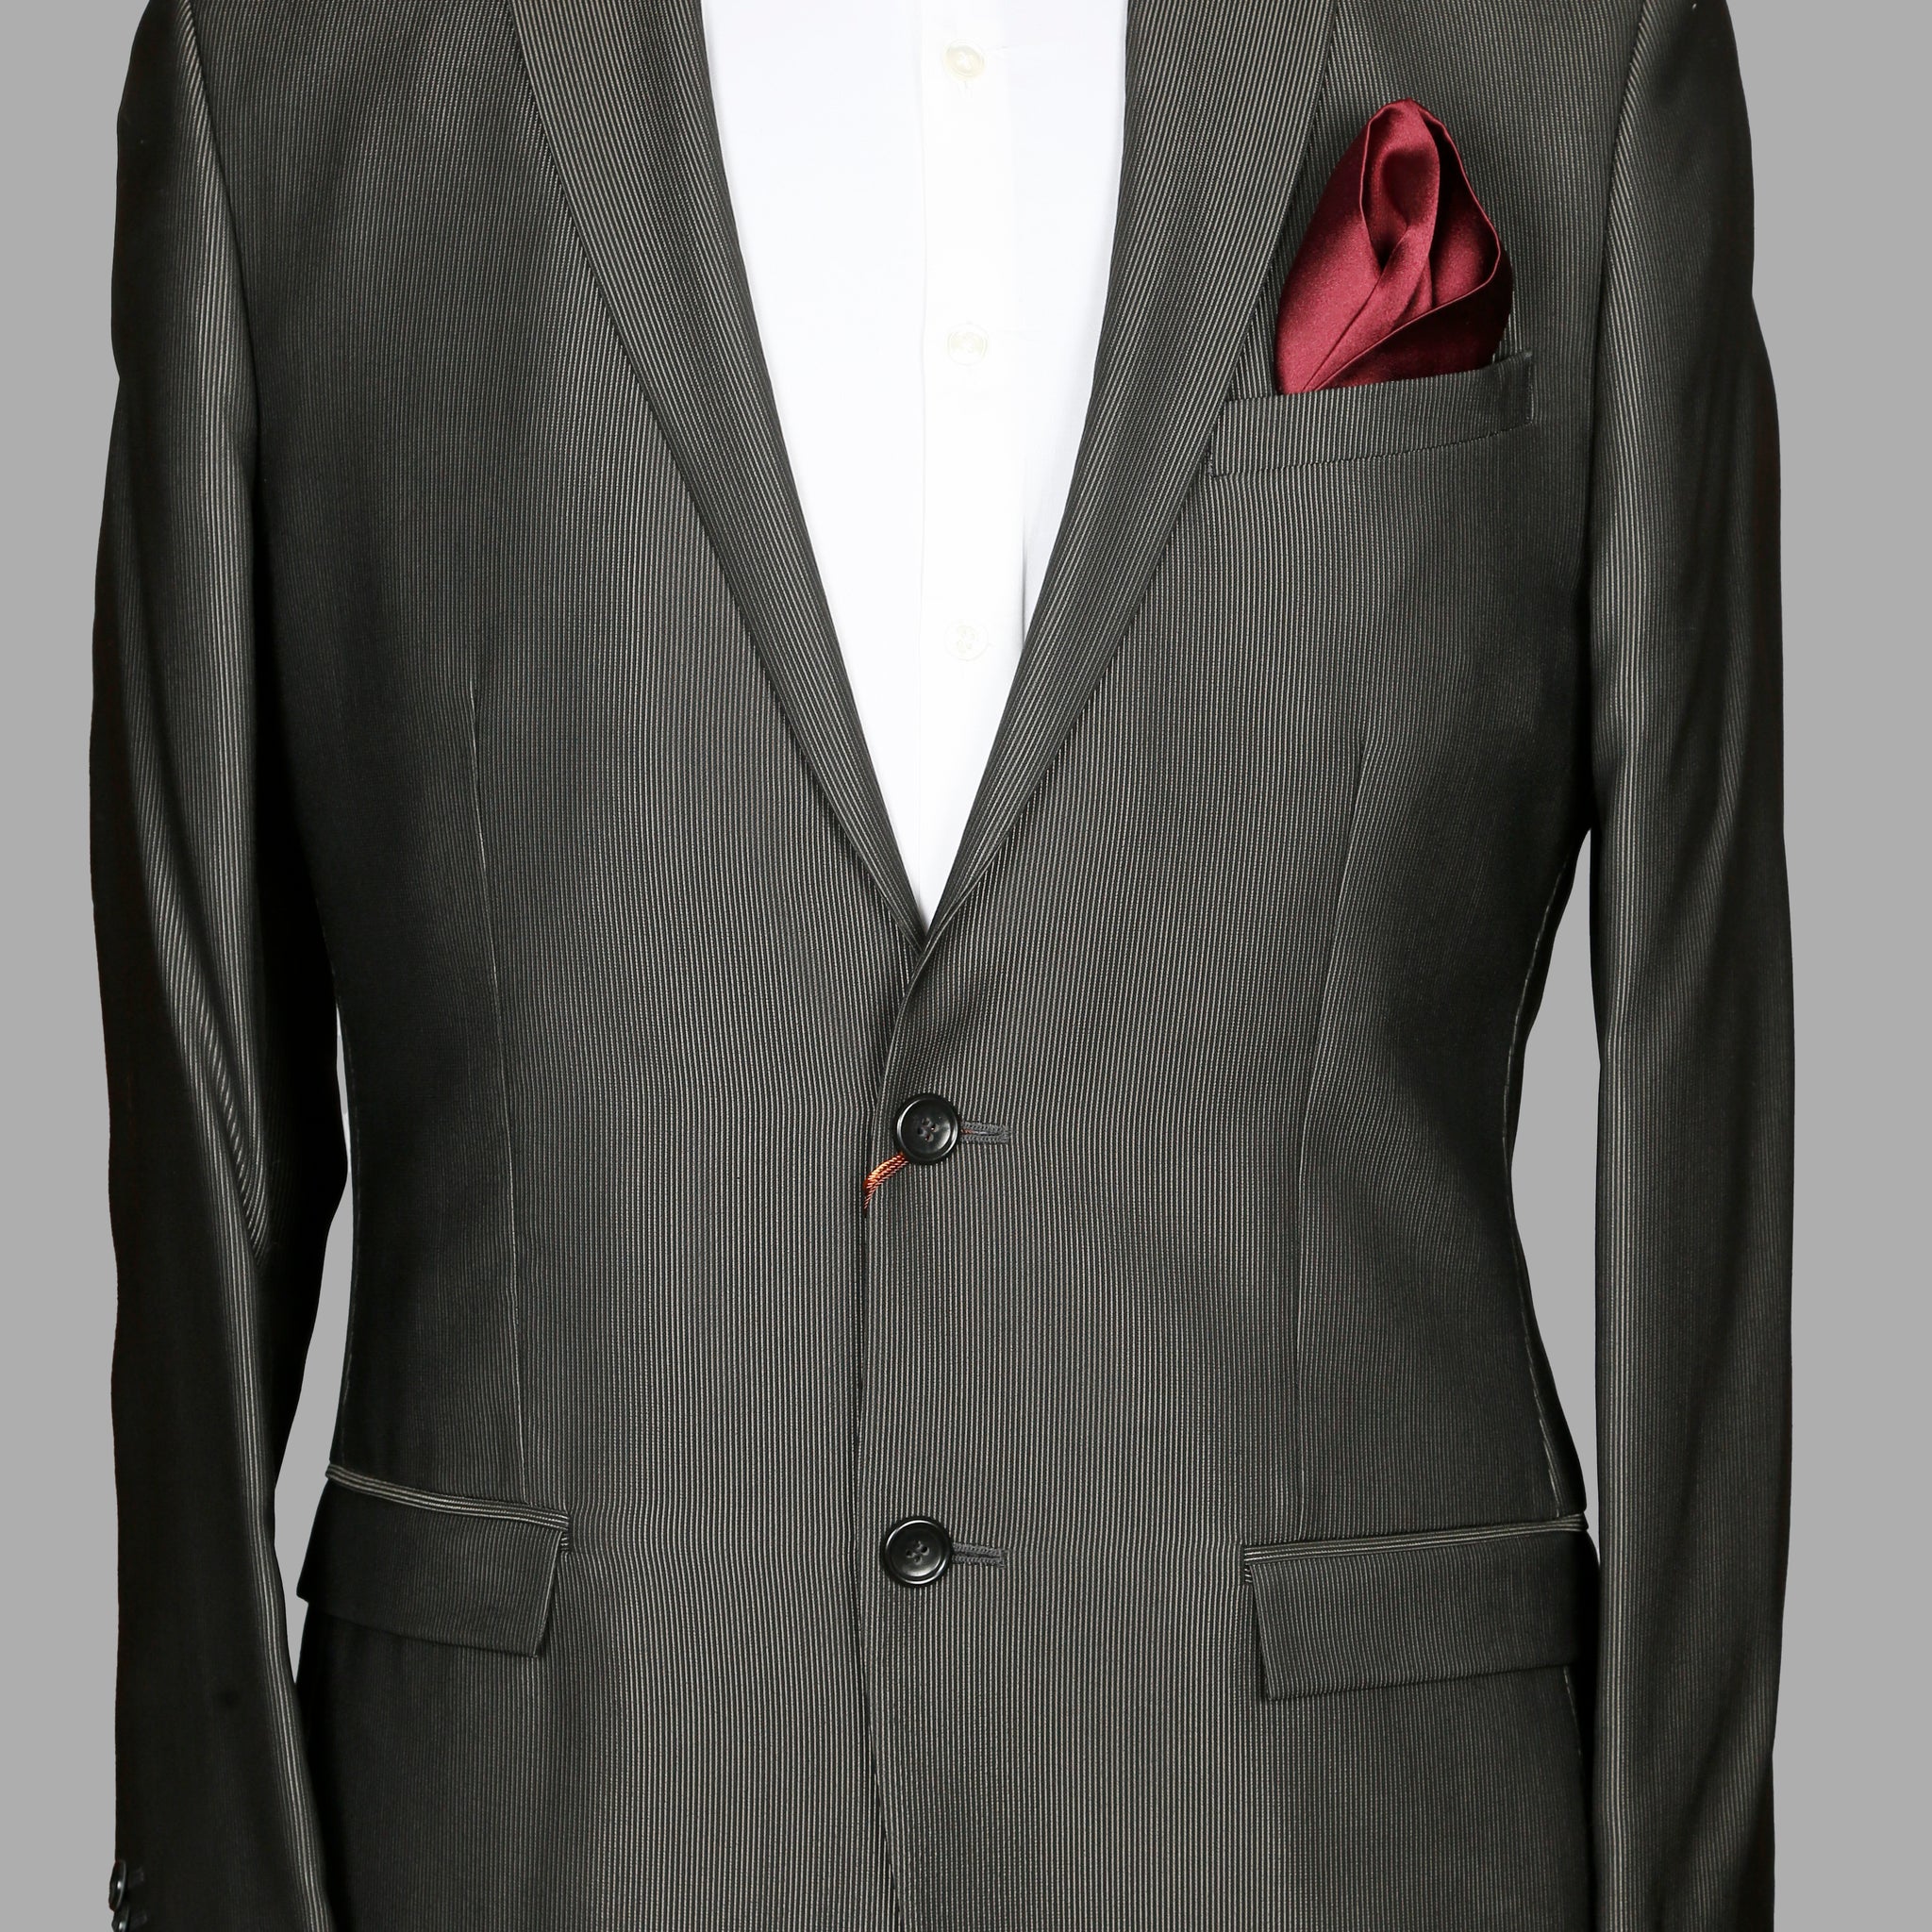 CHARCOAL Textured Designer Suit